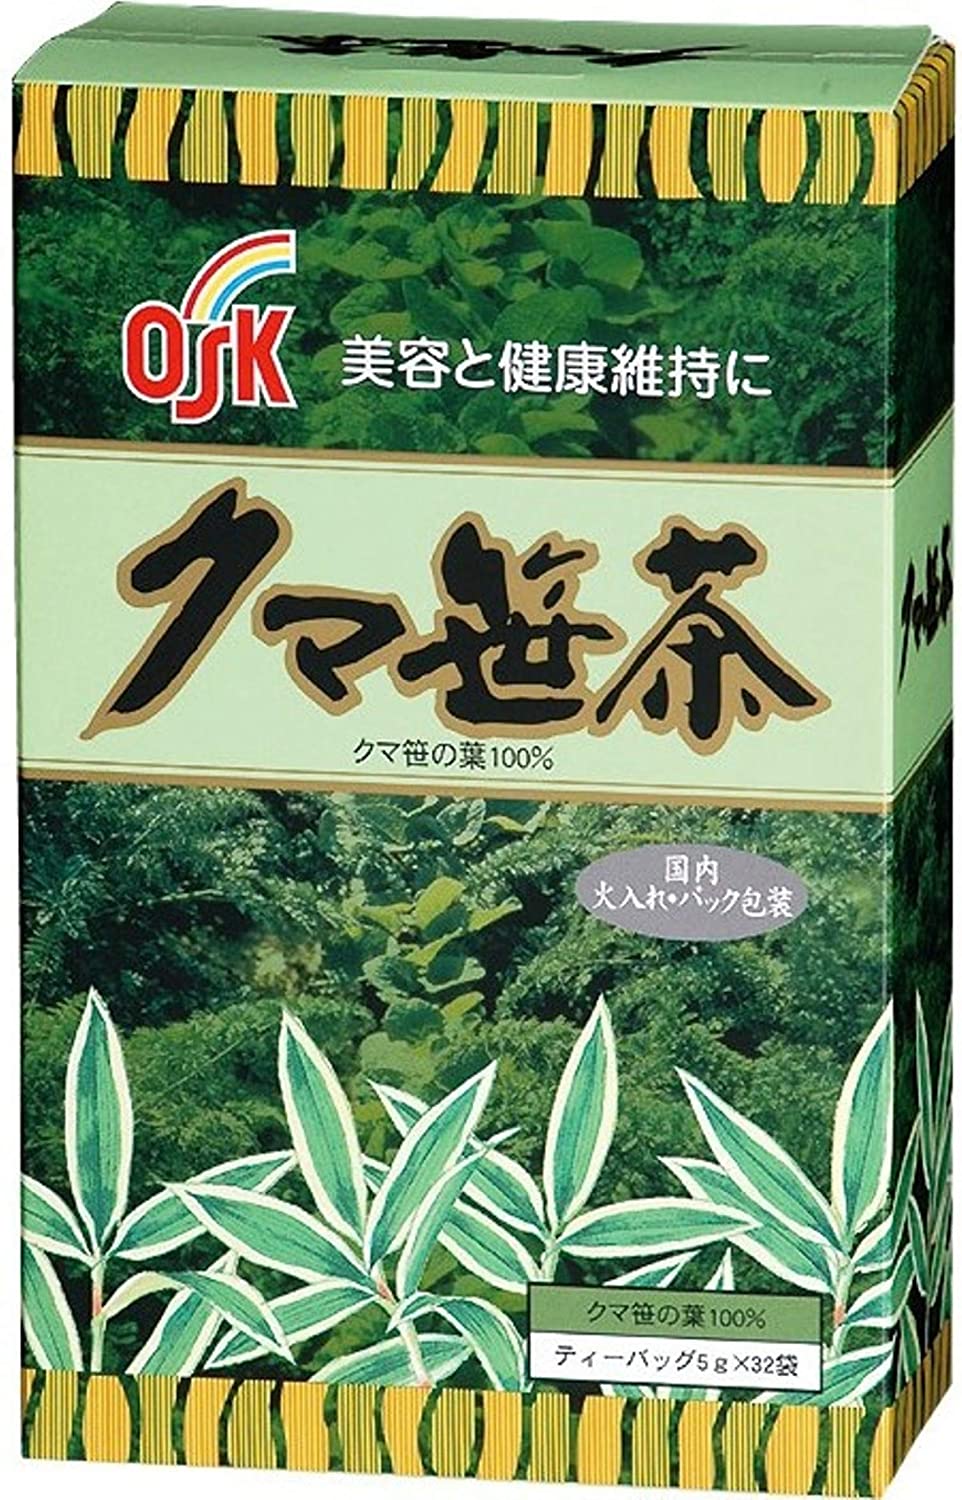 OSK クマ笹茶 160g(32P)